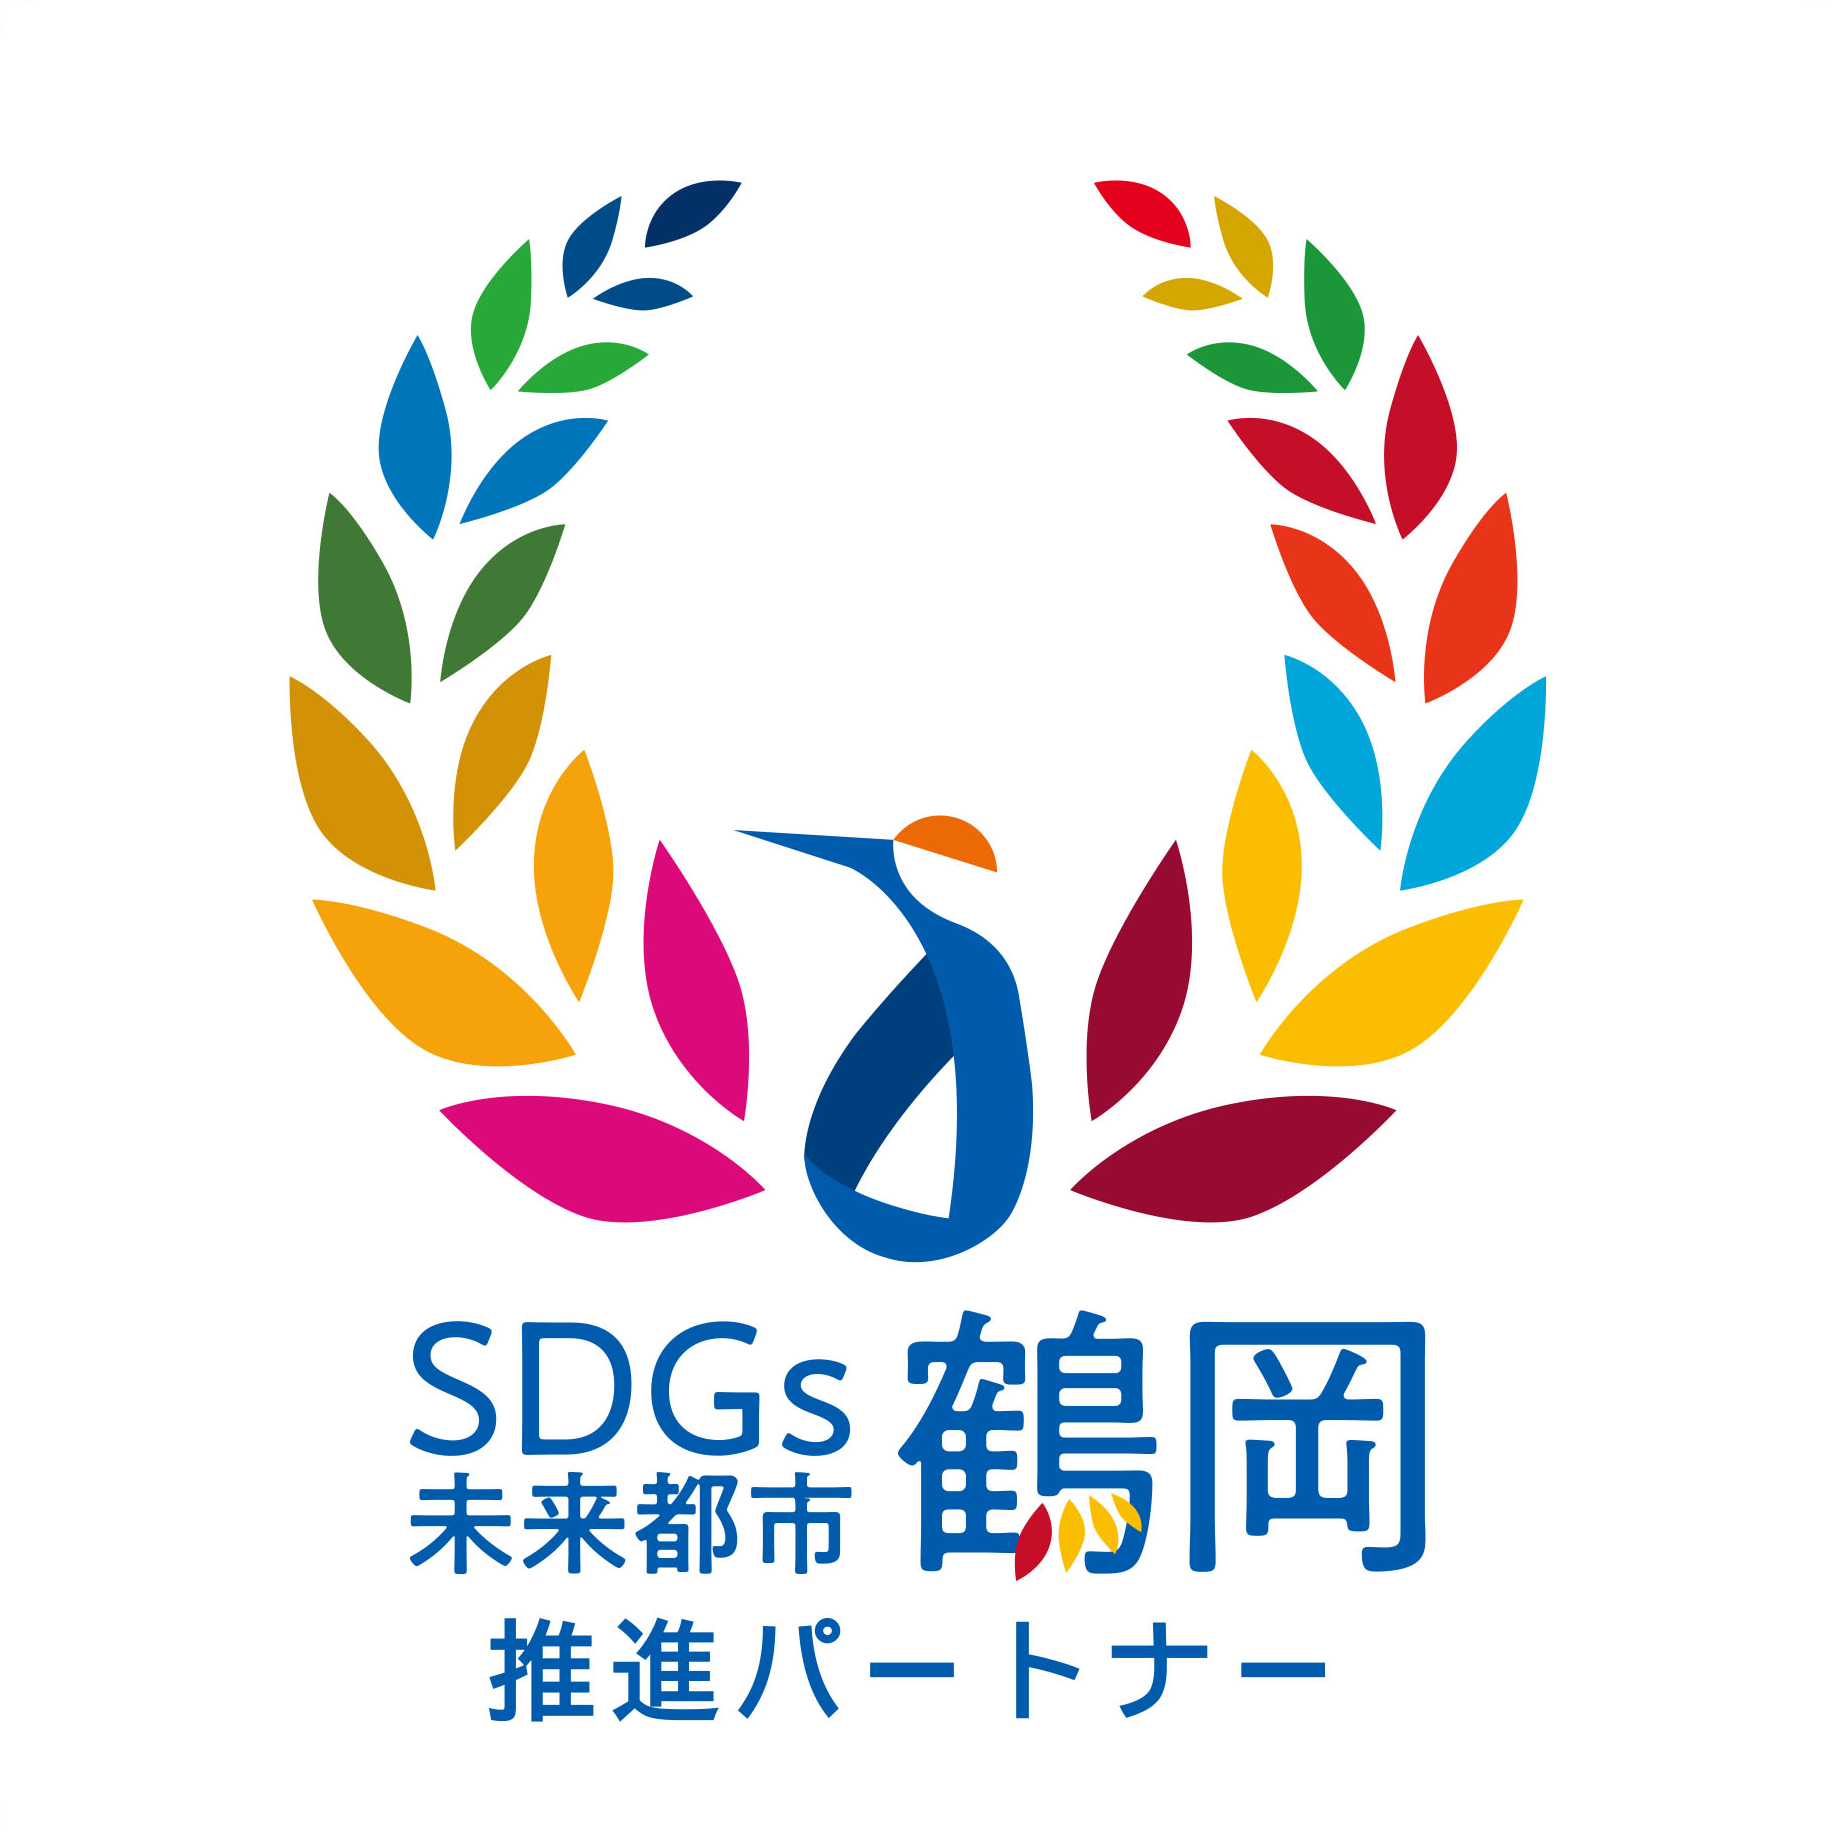 SDGs未来都市鶴岡推進パートナー企業に登録されました